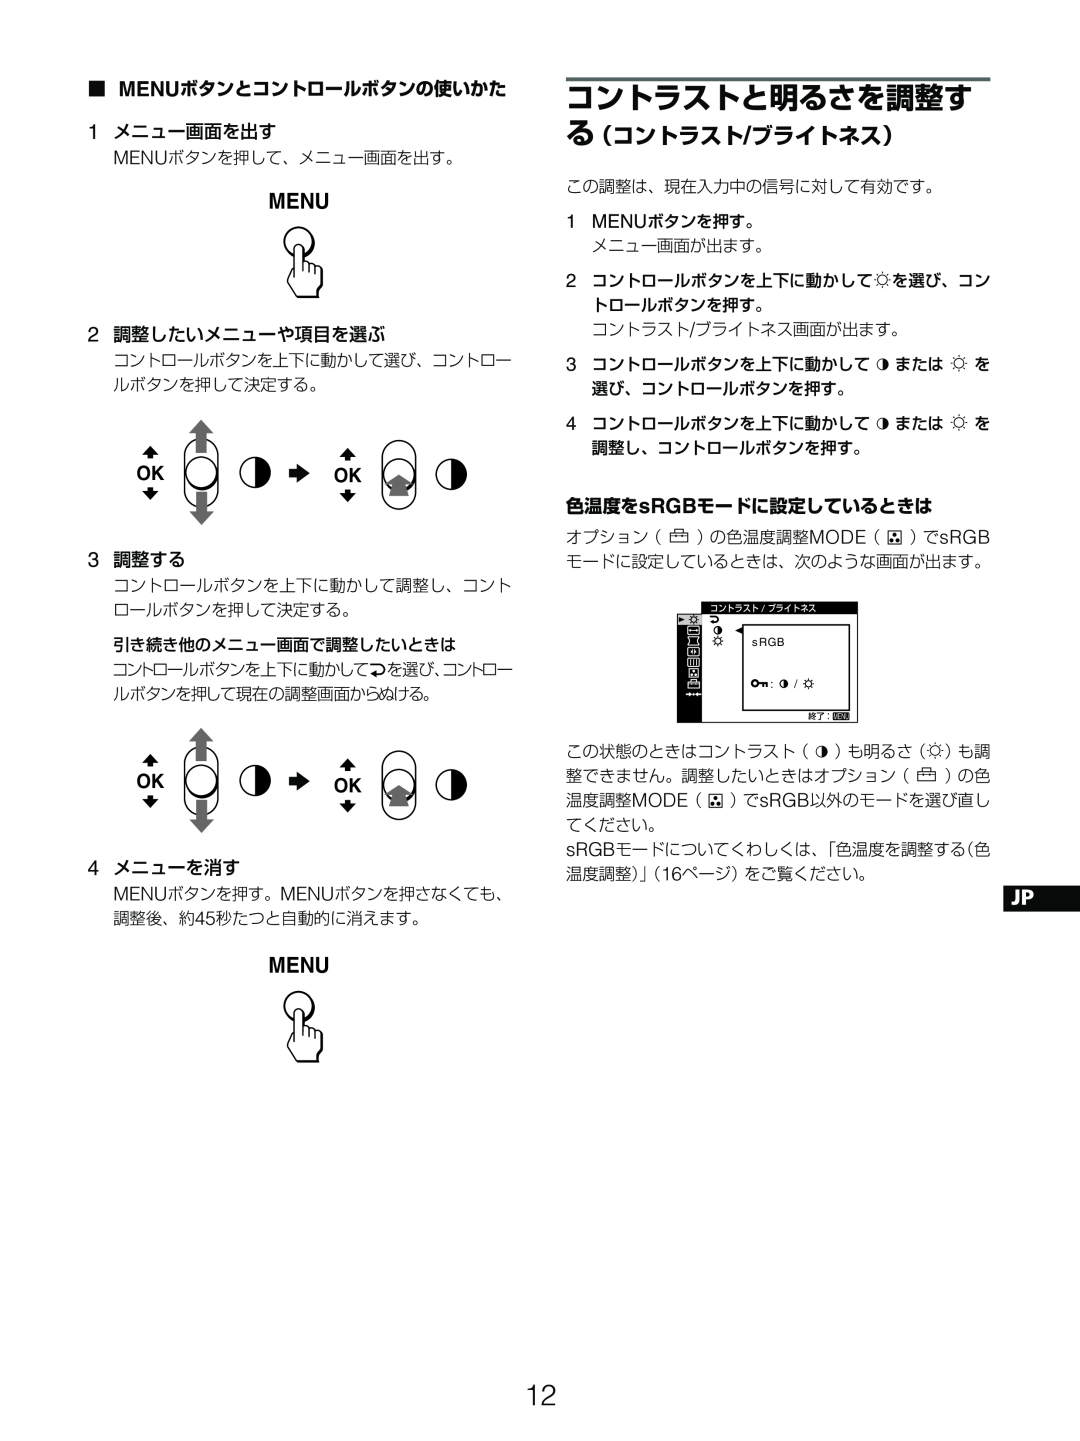 Sony GDM-5510 b OK, コントラストと明るさを調整す, る（コントラスト/ブライトネス）, Menuボタンとコントロールボタンの使いかた, メニュー画面を出す, 調整したいメニューや項目を選ぶ, 調整する 